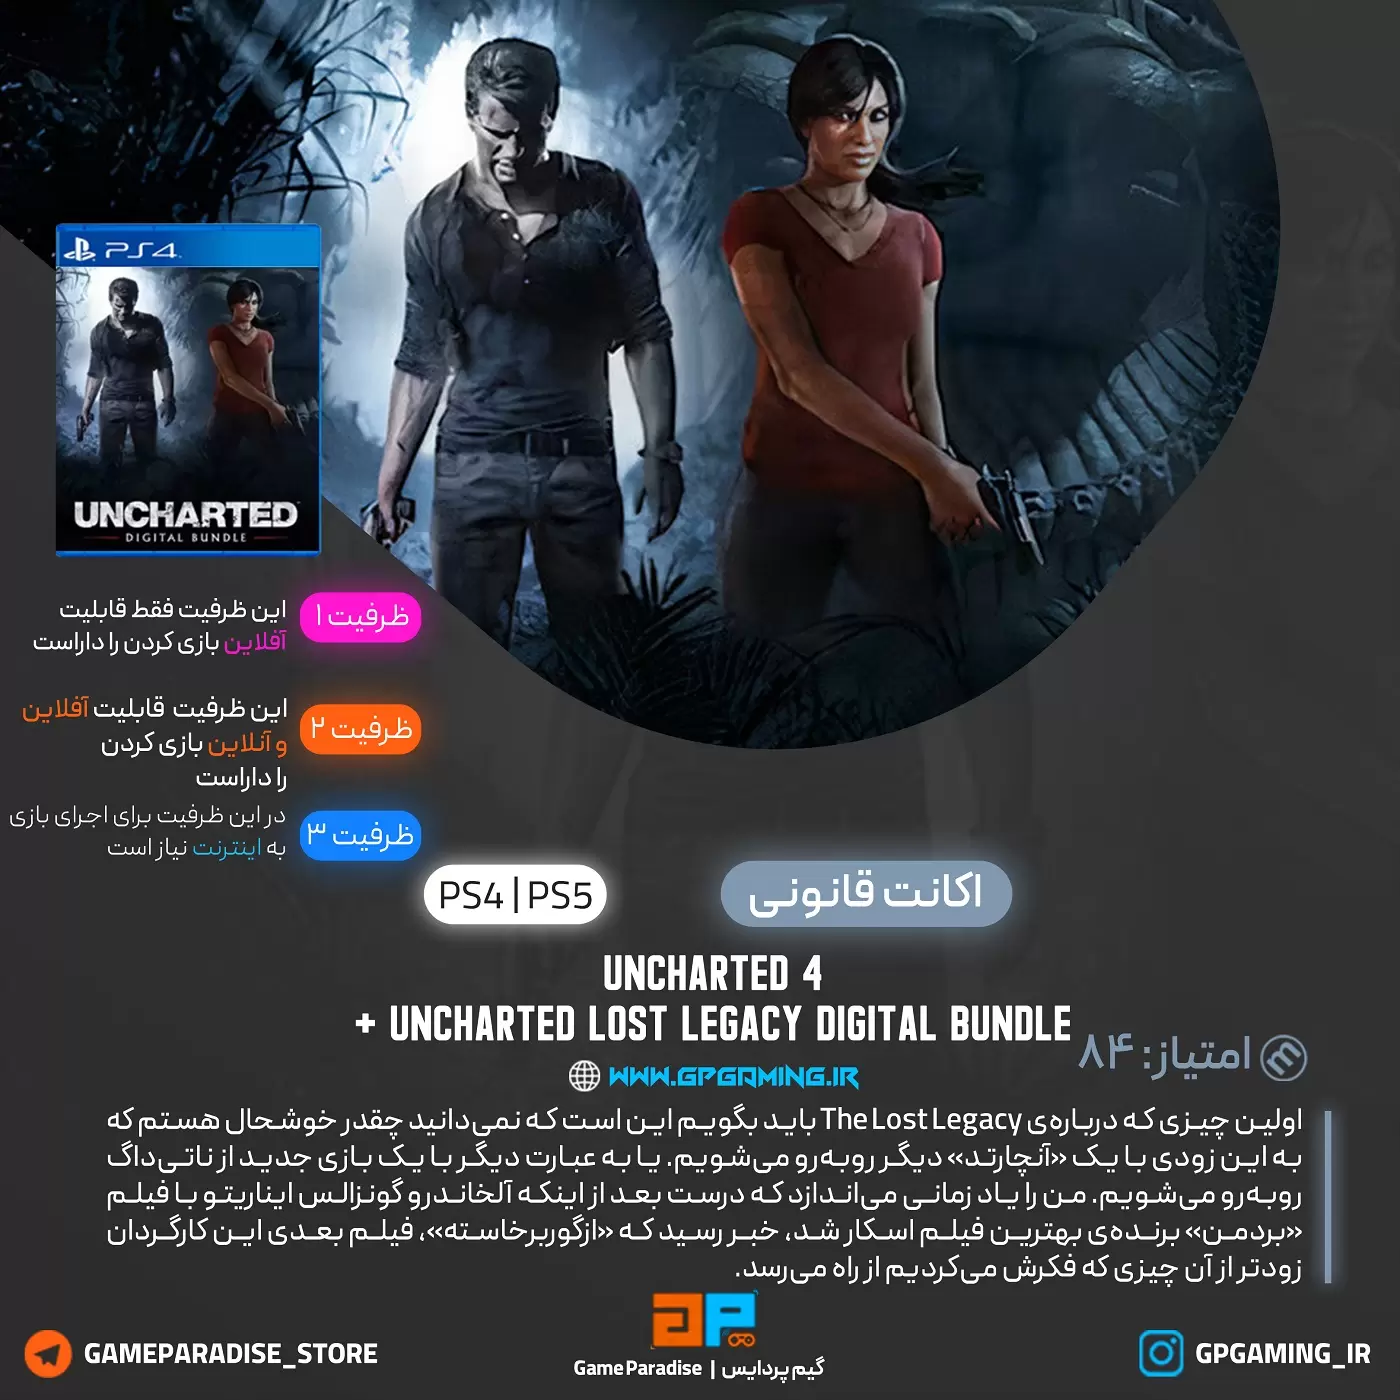  اکانت قانونی UNCHARTED 4: A Thief’s End & UNCHARTED: The Lost Legacy Digital Bundle برای PS4 & PS5 